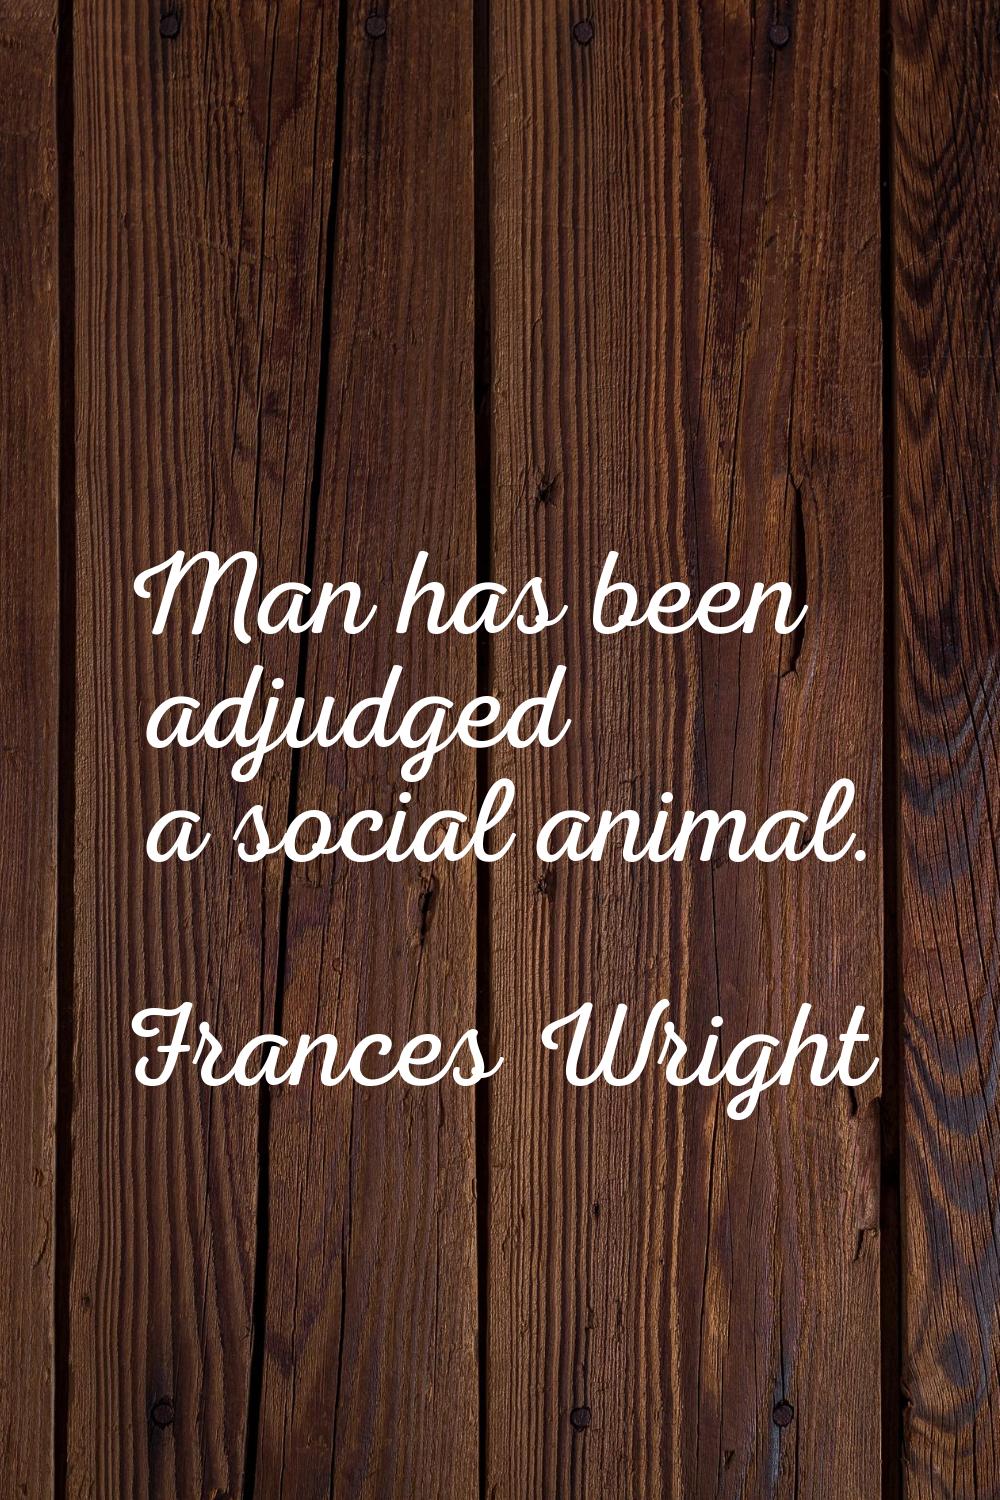 Man has been adjudged a social animal.